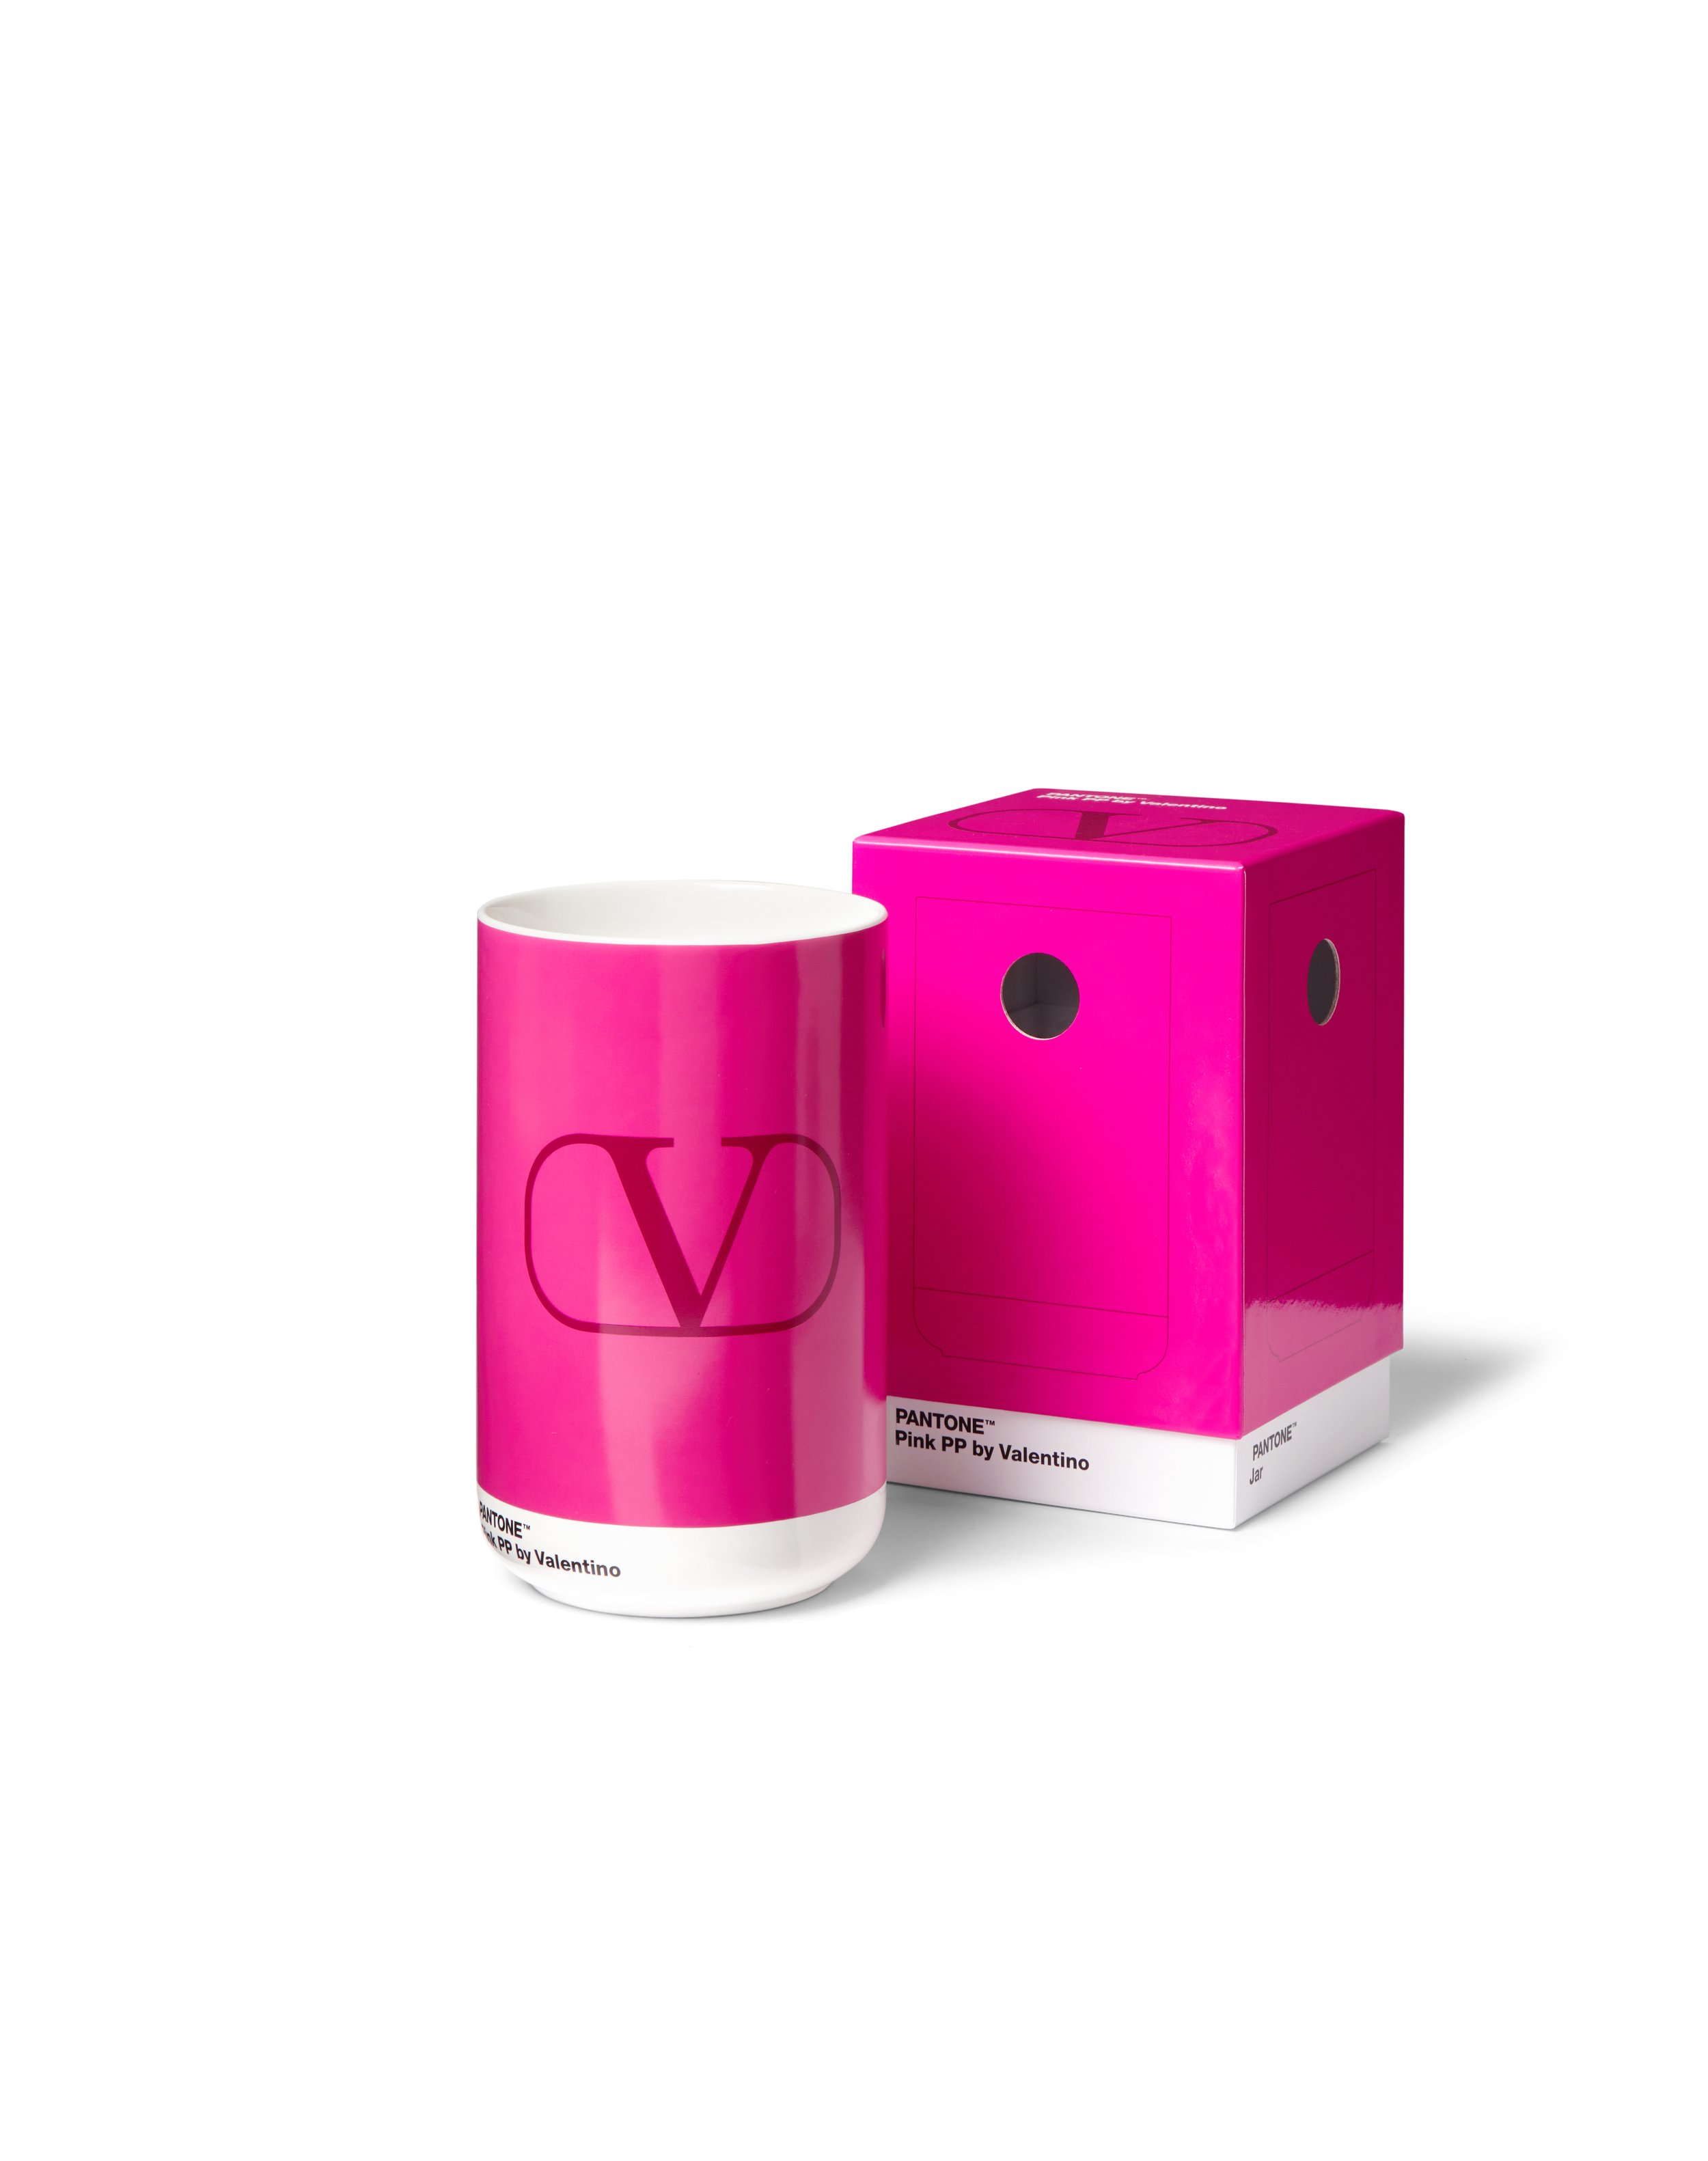 Pink PP Pantone x Valentino Limited Edition Jar